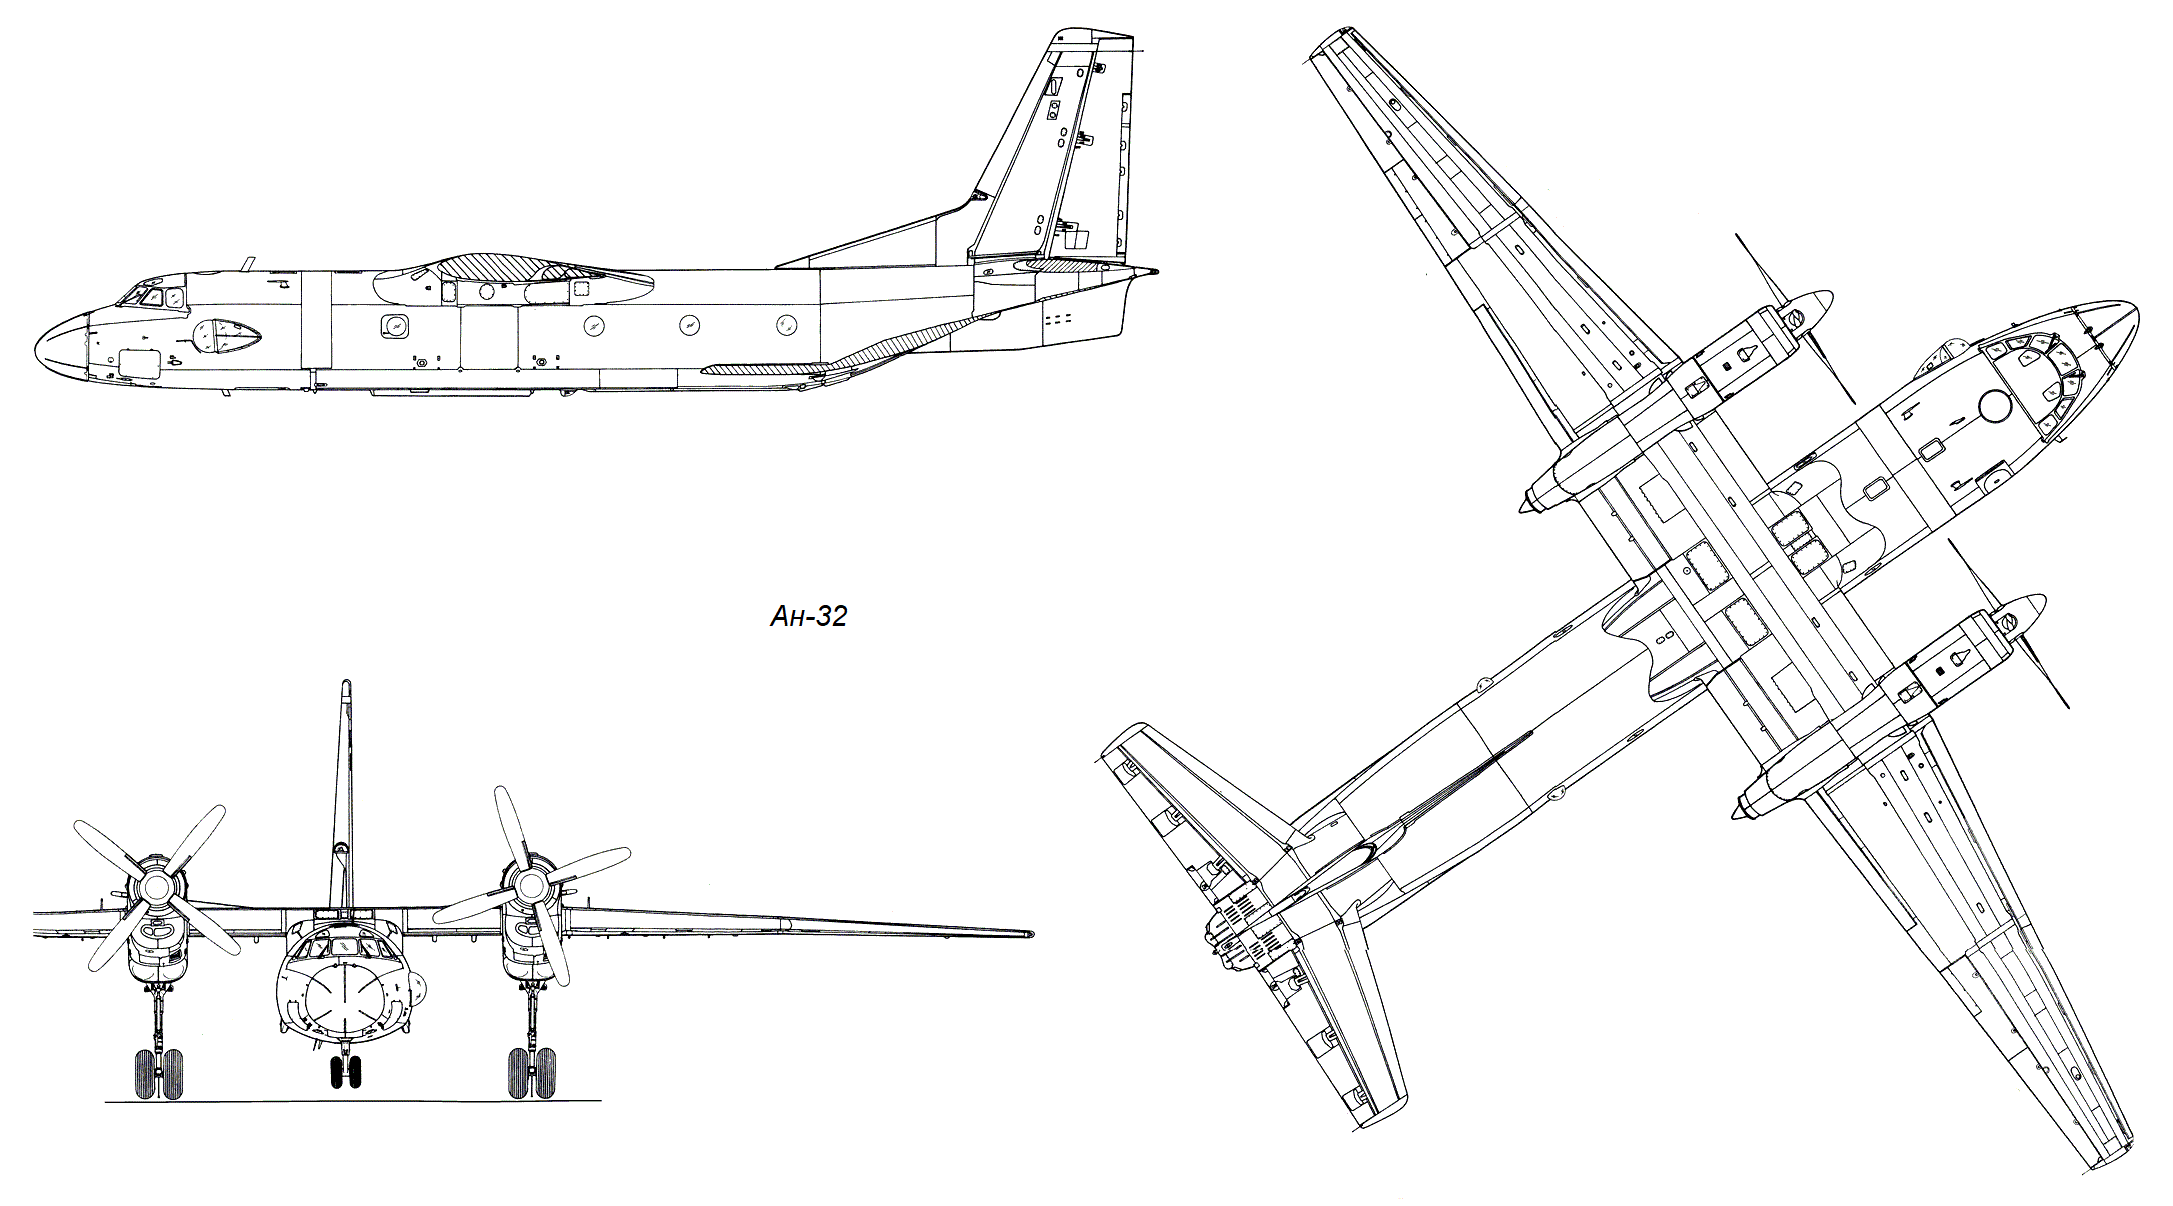 Антонов ан-8. фото, история и характеристики самолета.